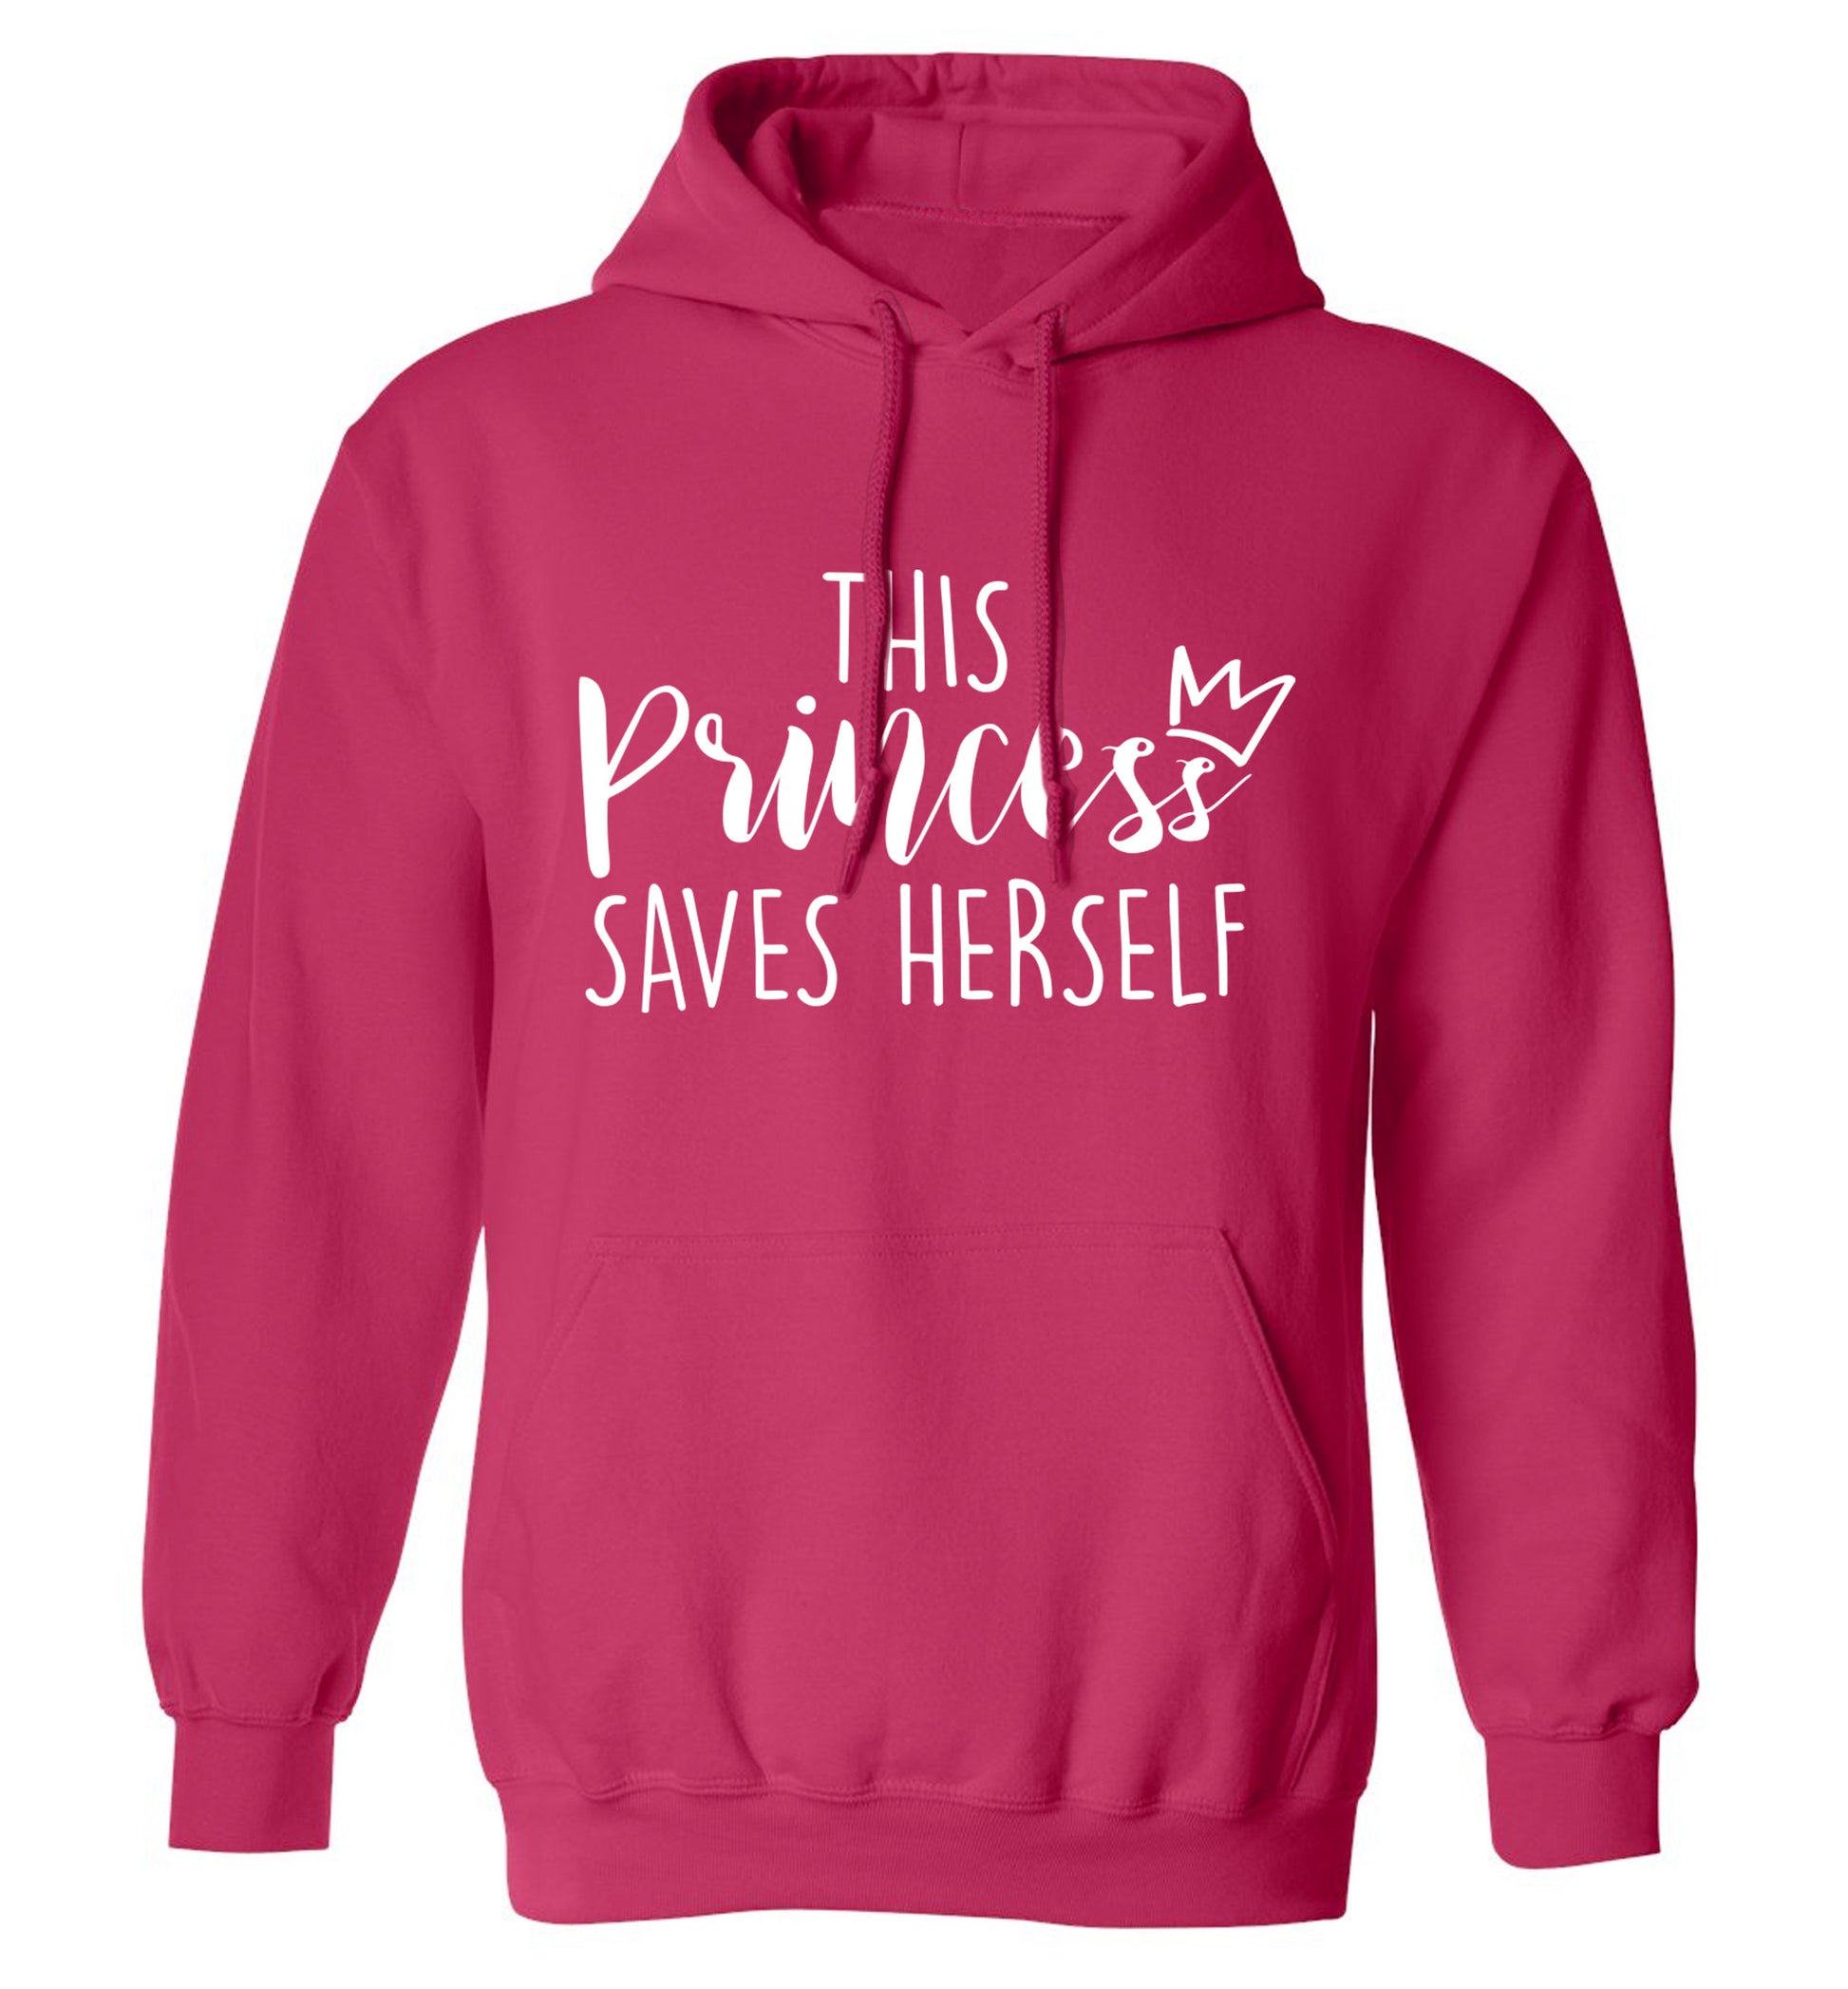 This princess saves herself adults unisex pink hoodie 2XL